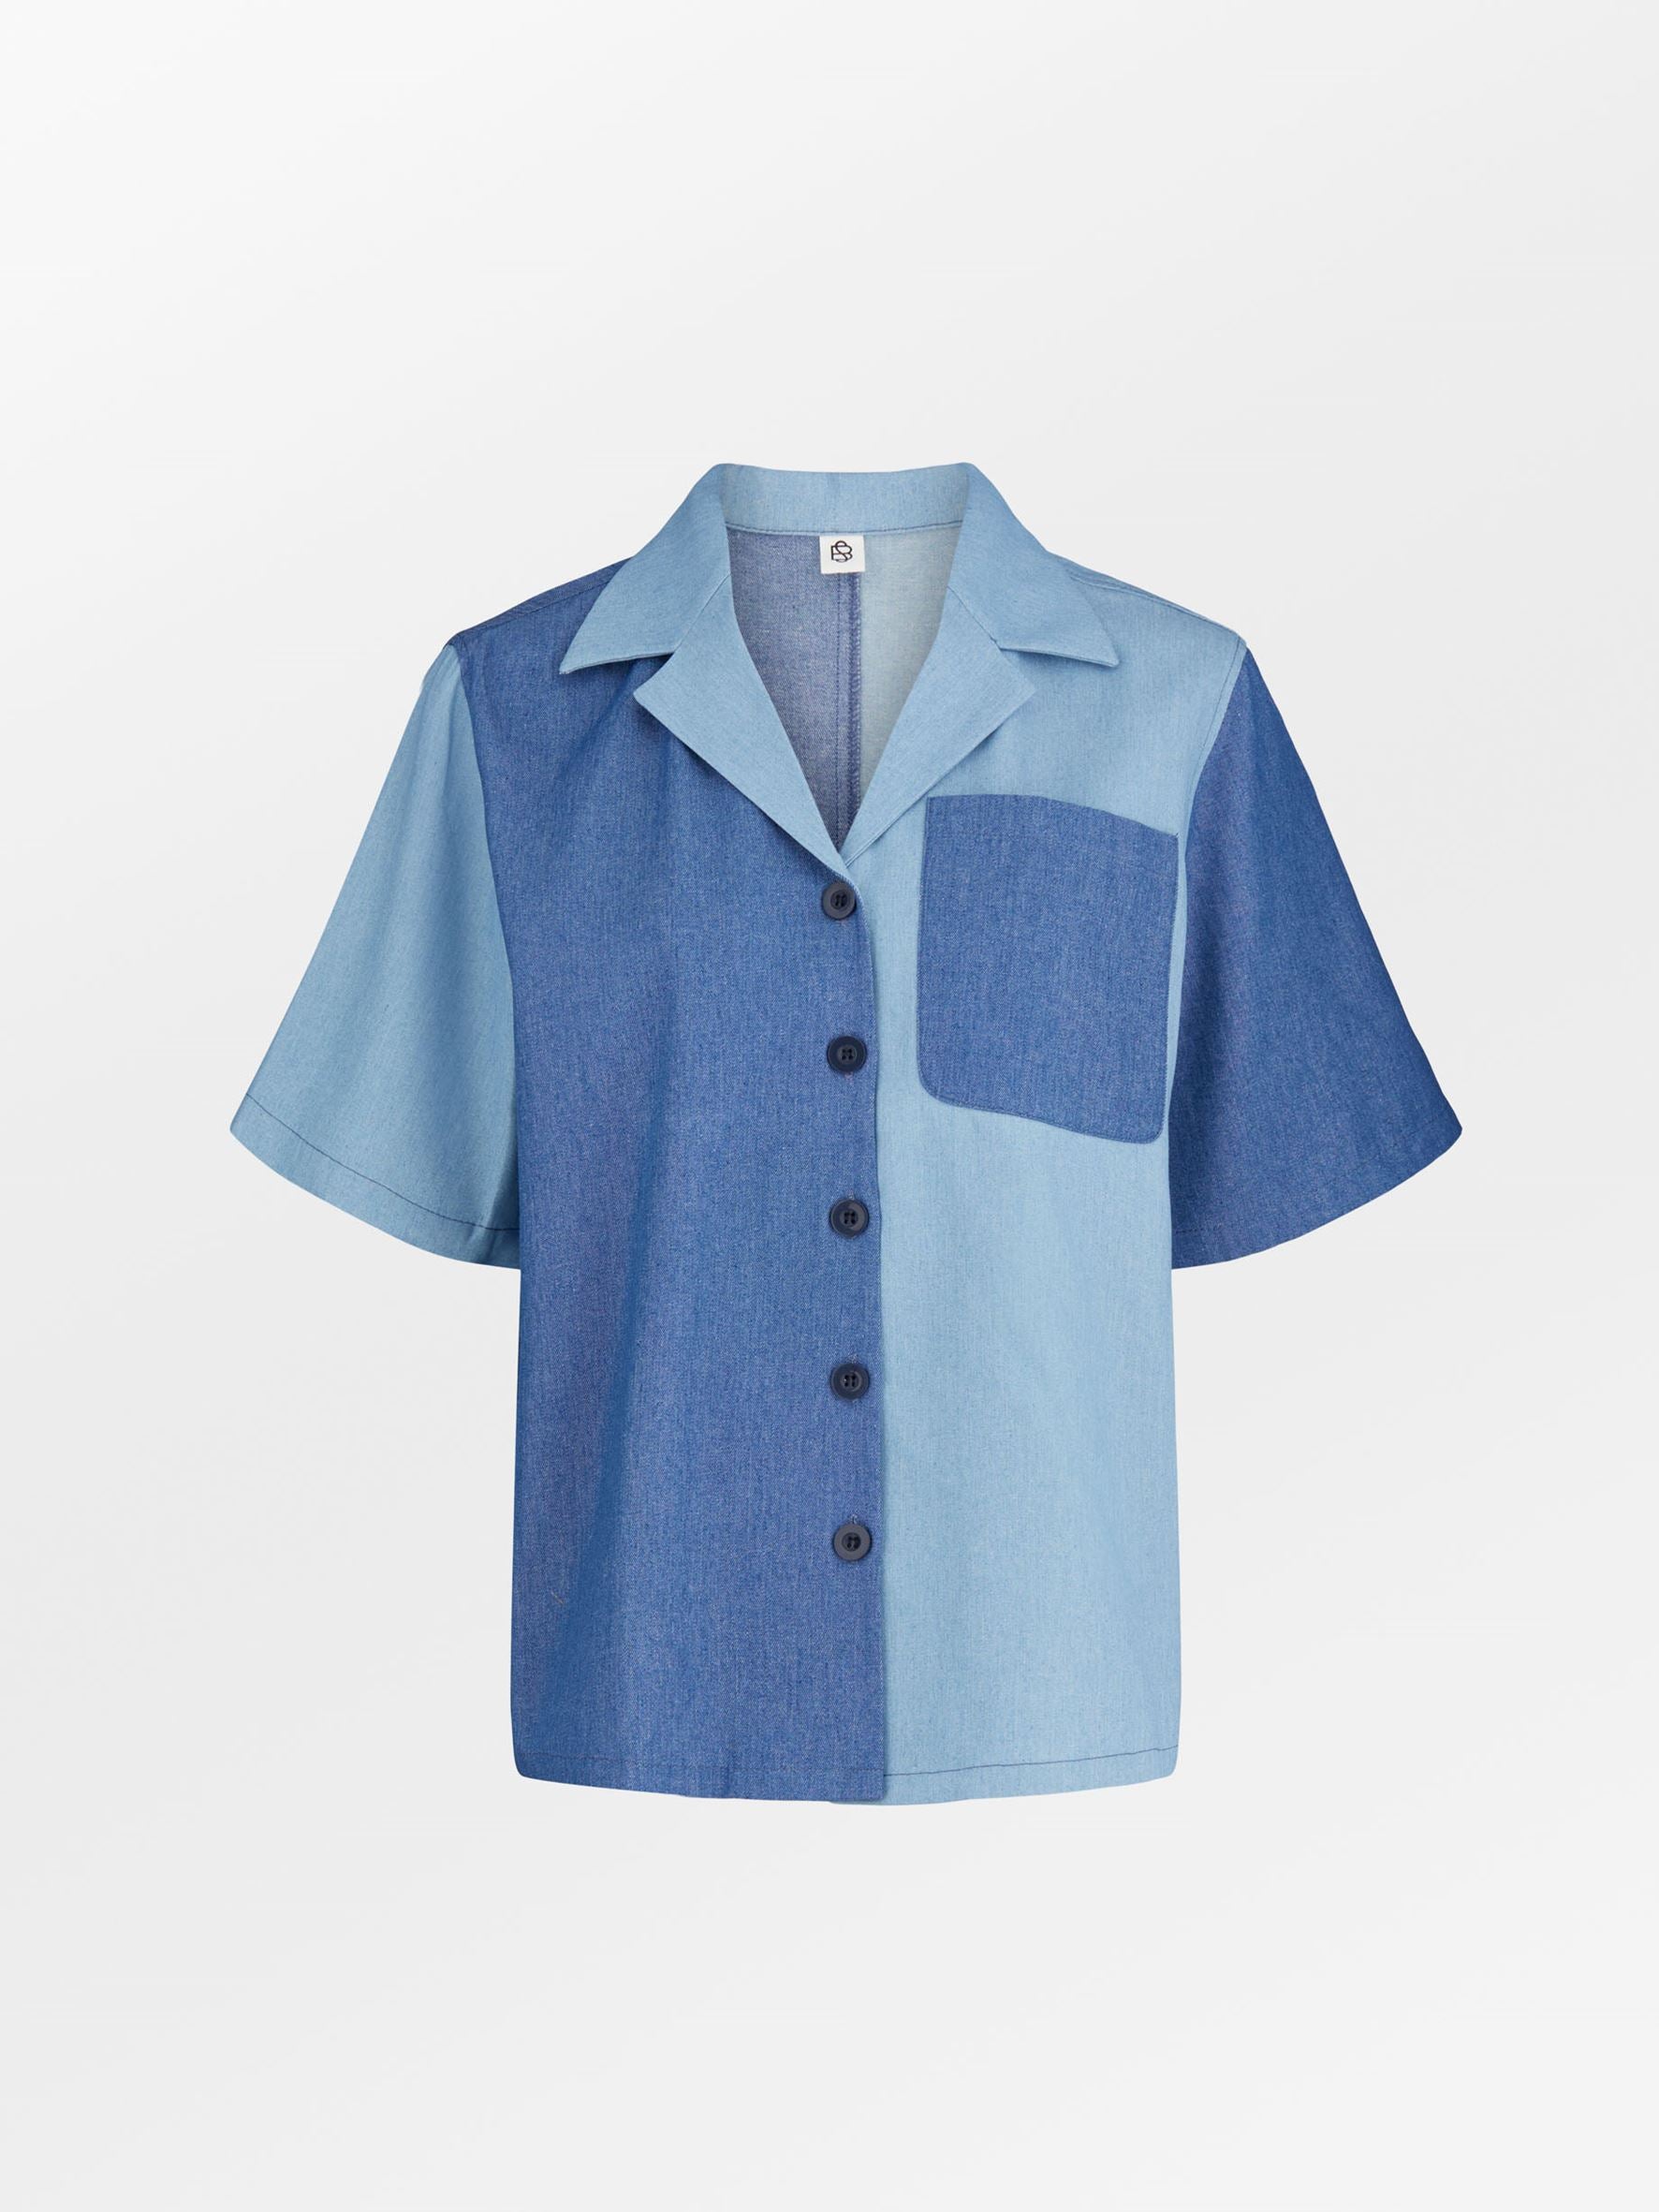 Becksöndergaard, Denia Denim Shirt - Patriot Blue, archive, sale, sale, archive